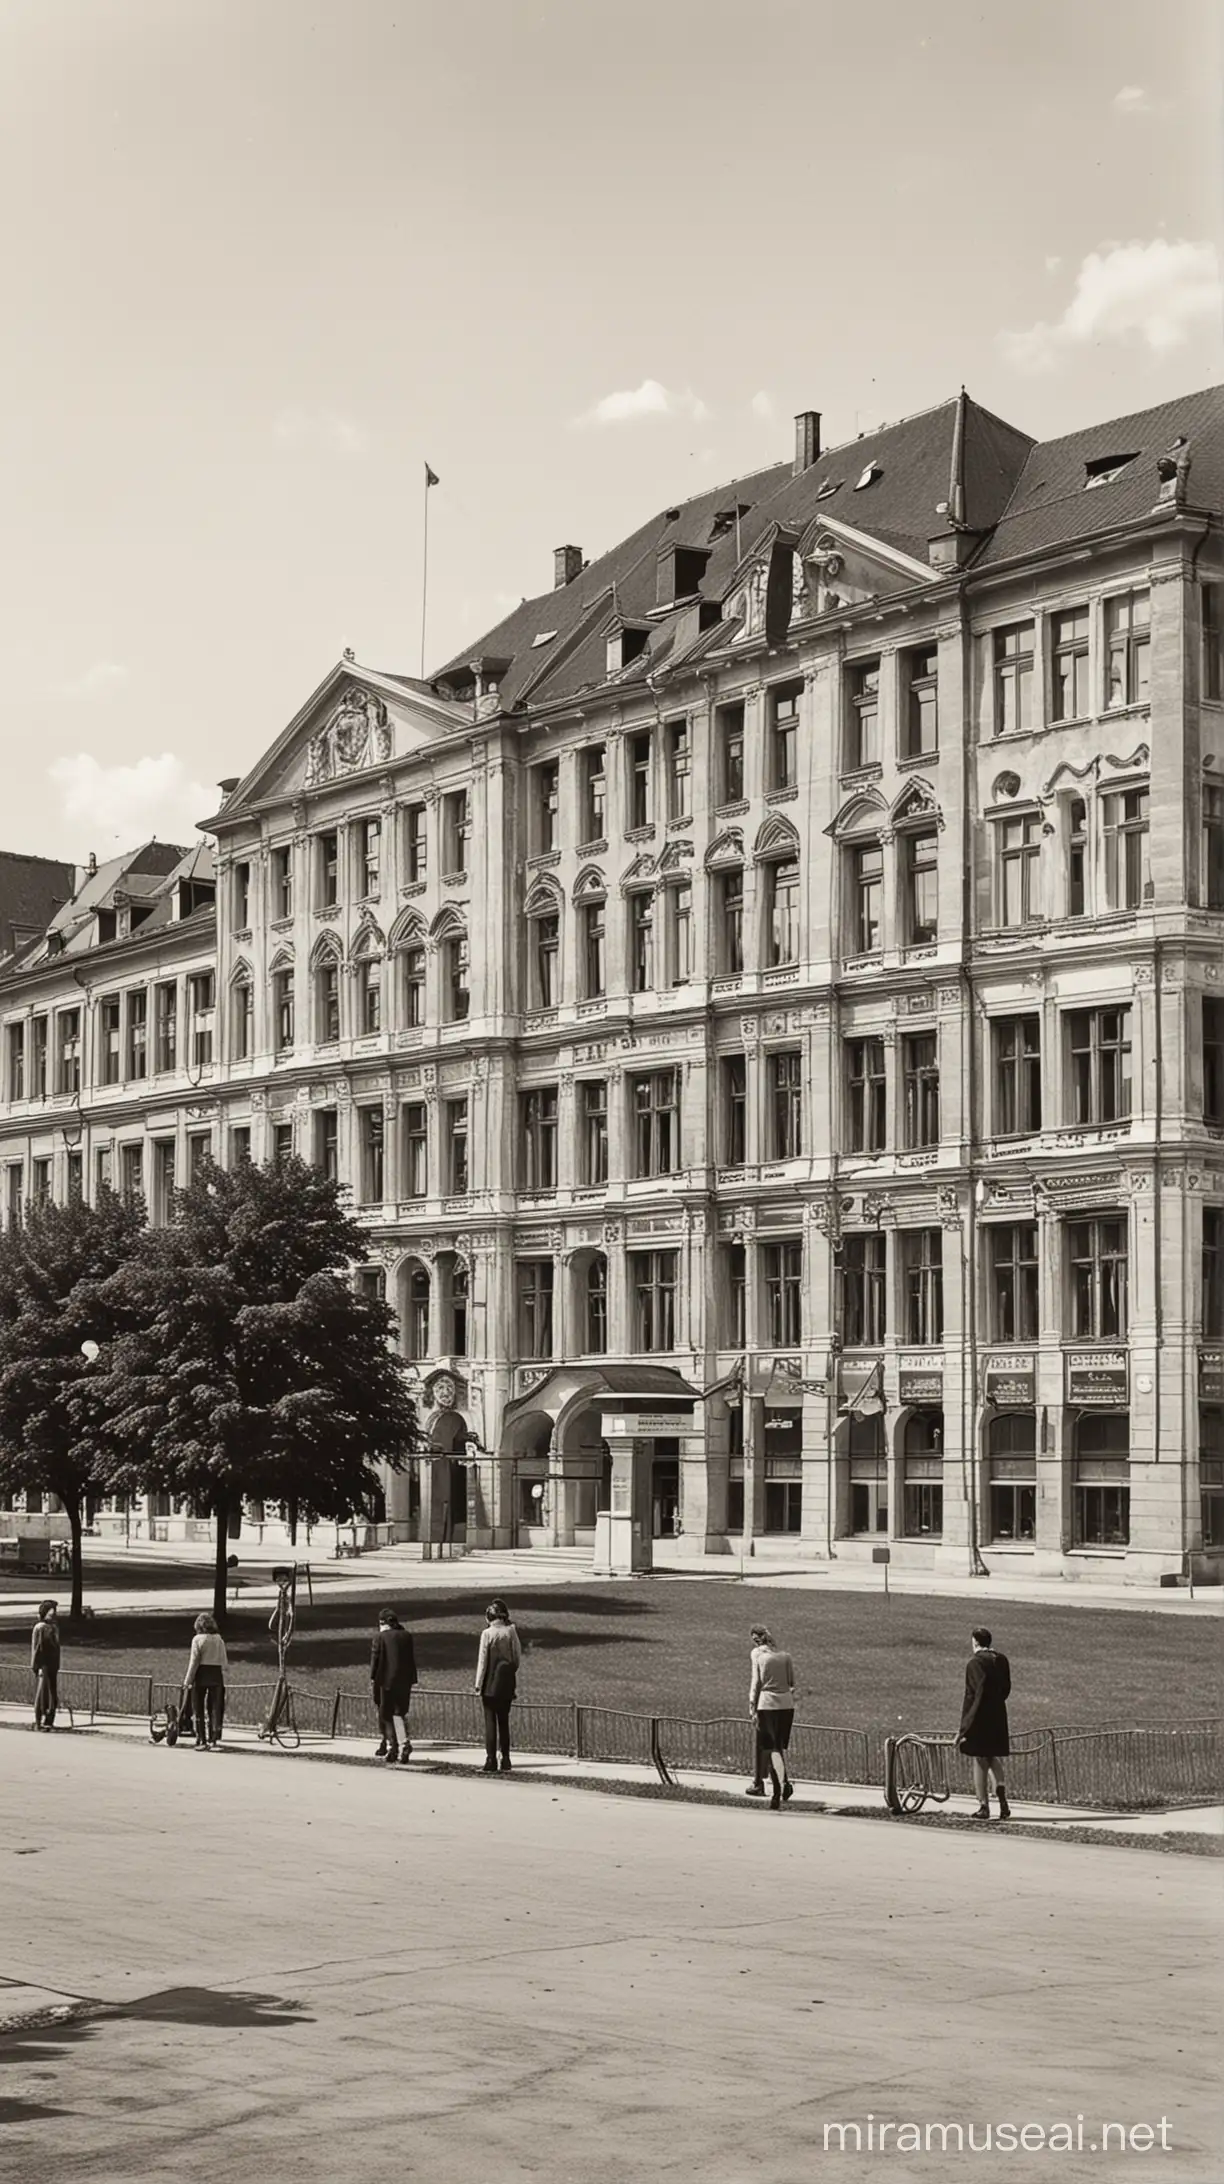 20th century Austrian secondary school